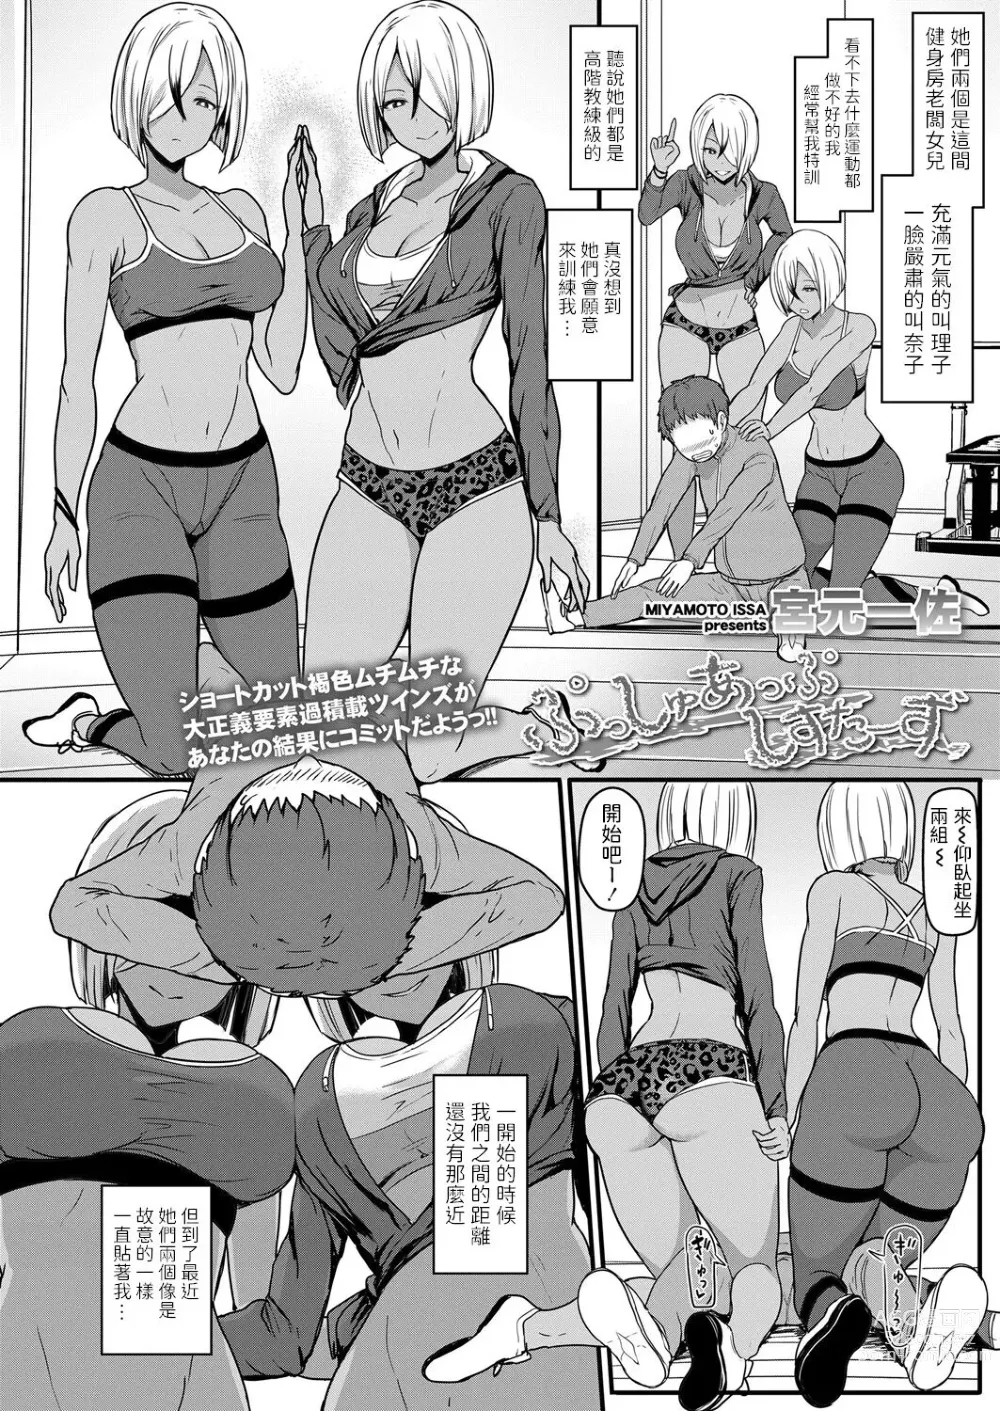 Page 2 of manga Push-Up Sisters